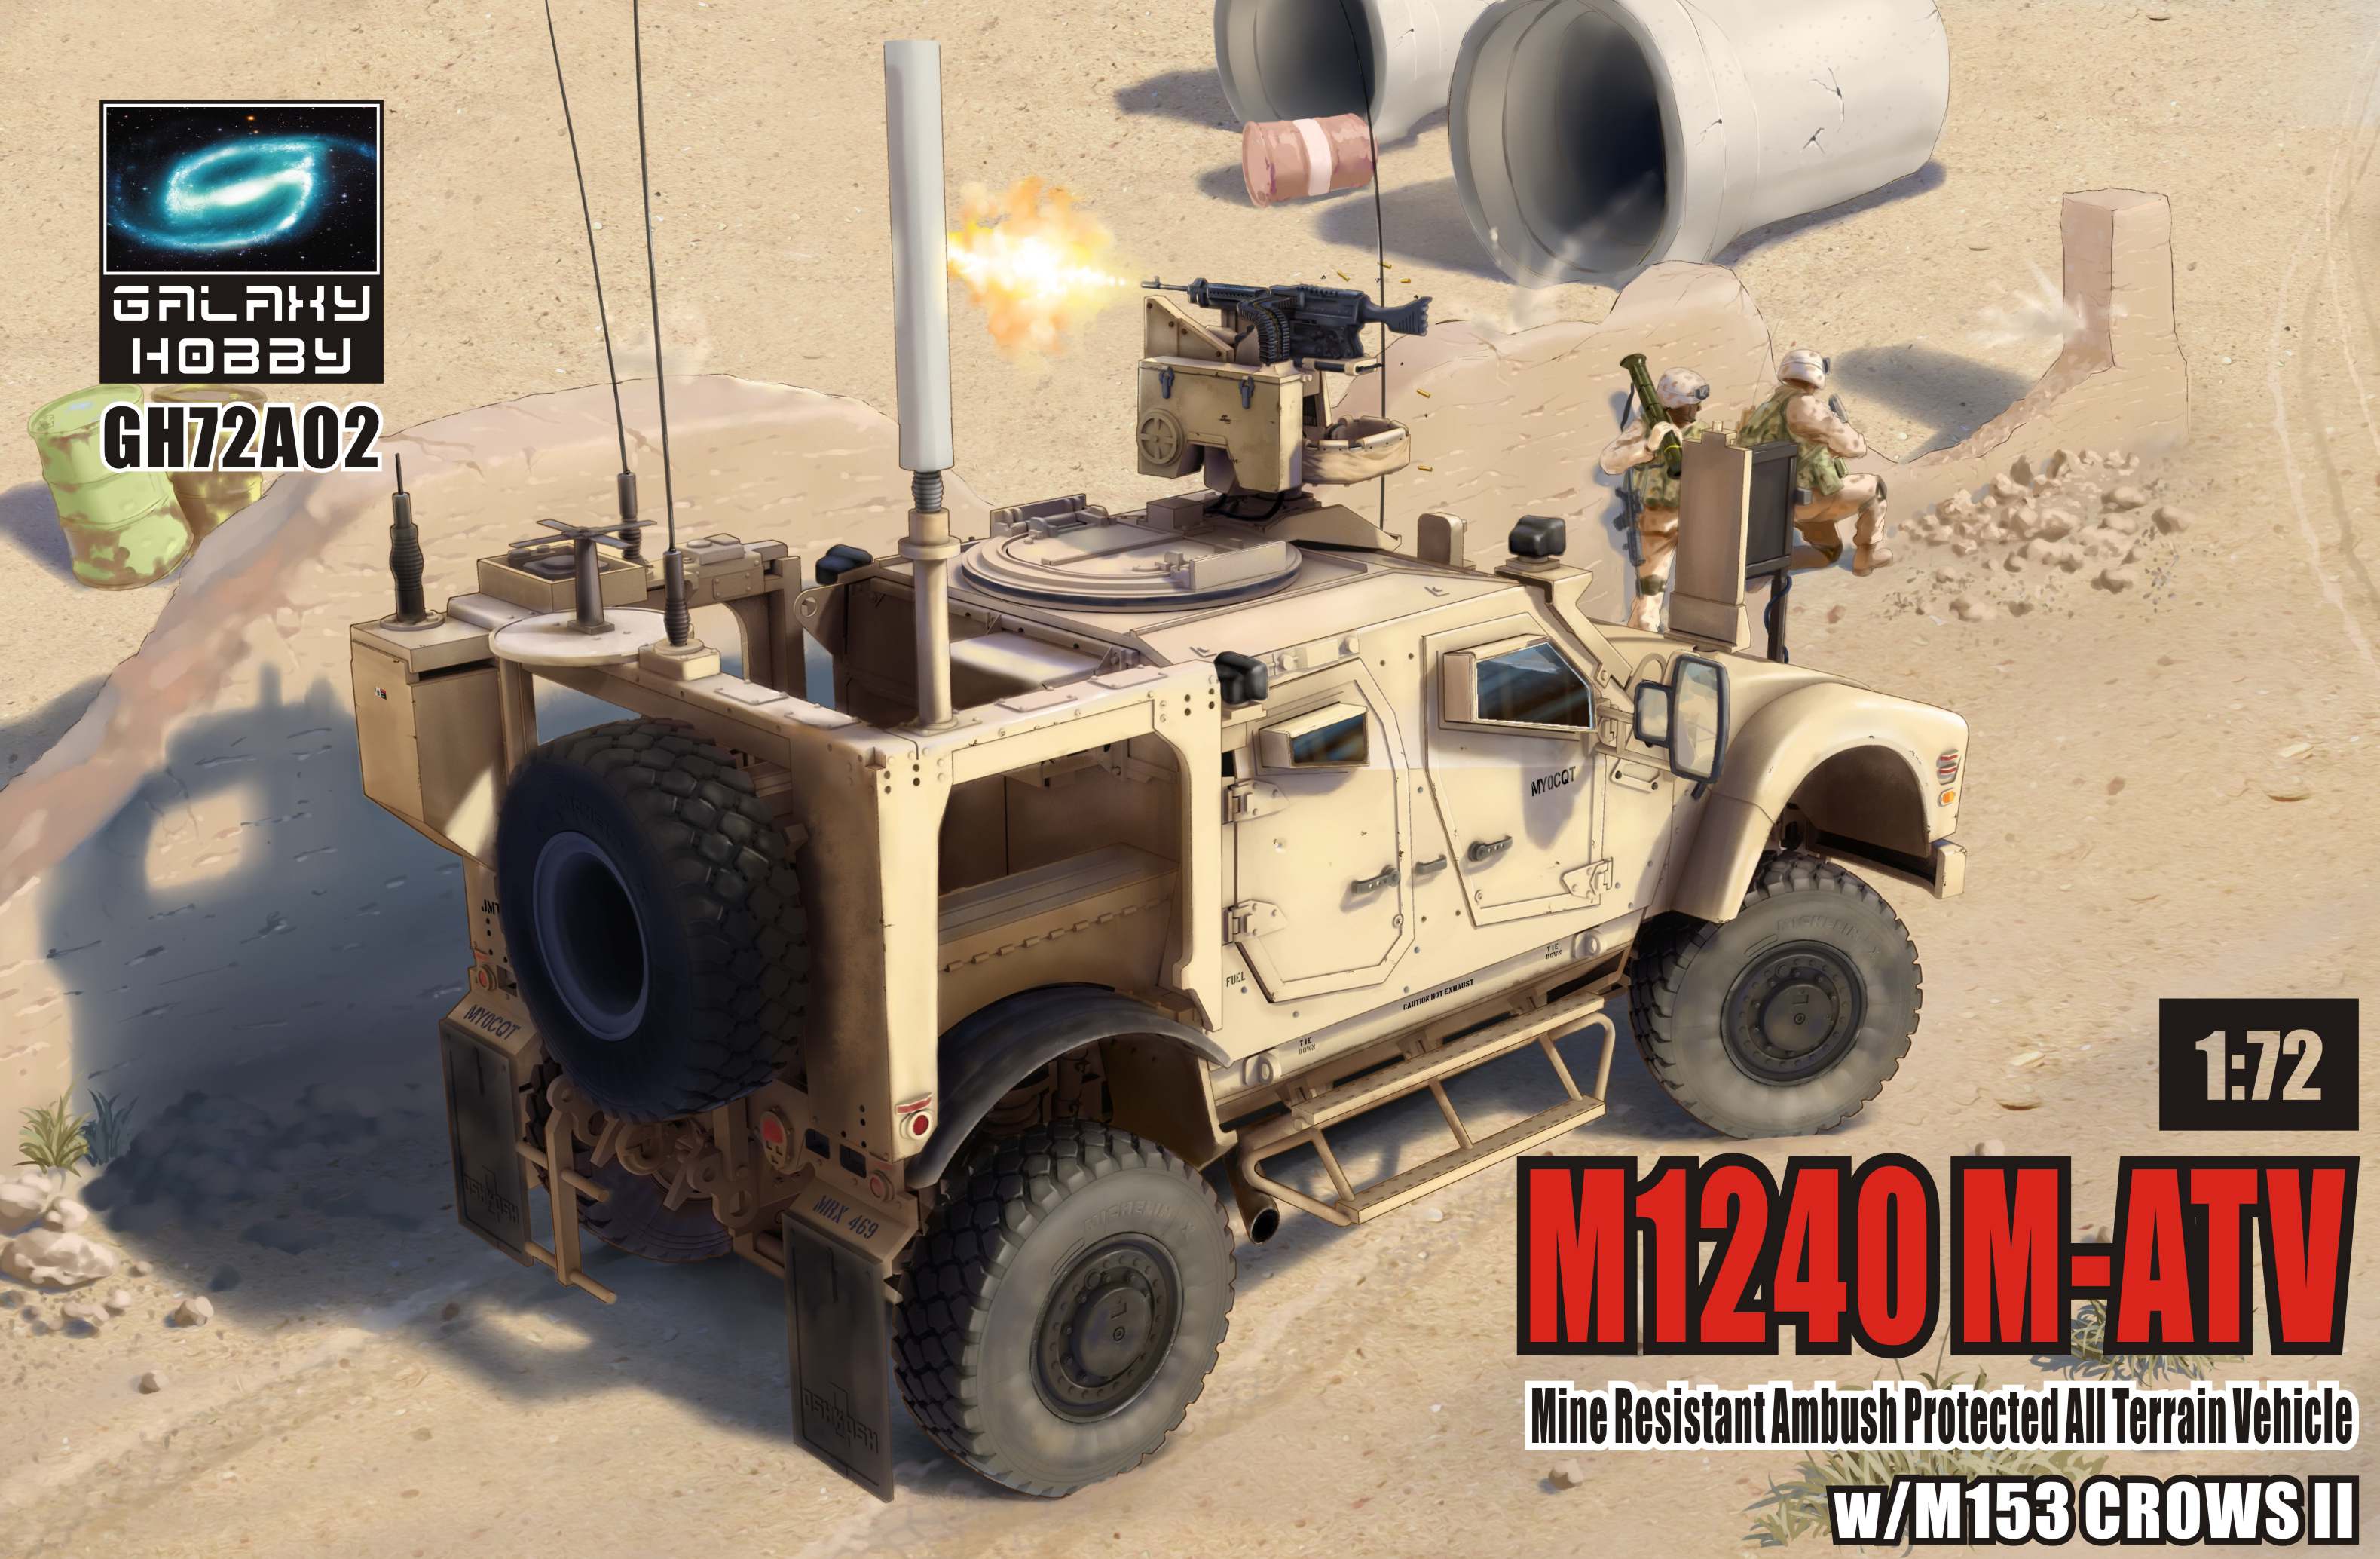 M1240 M-ATV with XM153 Crows II Rws